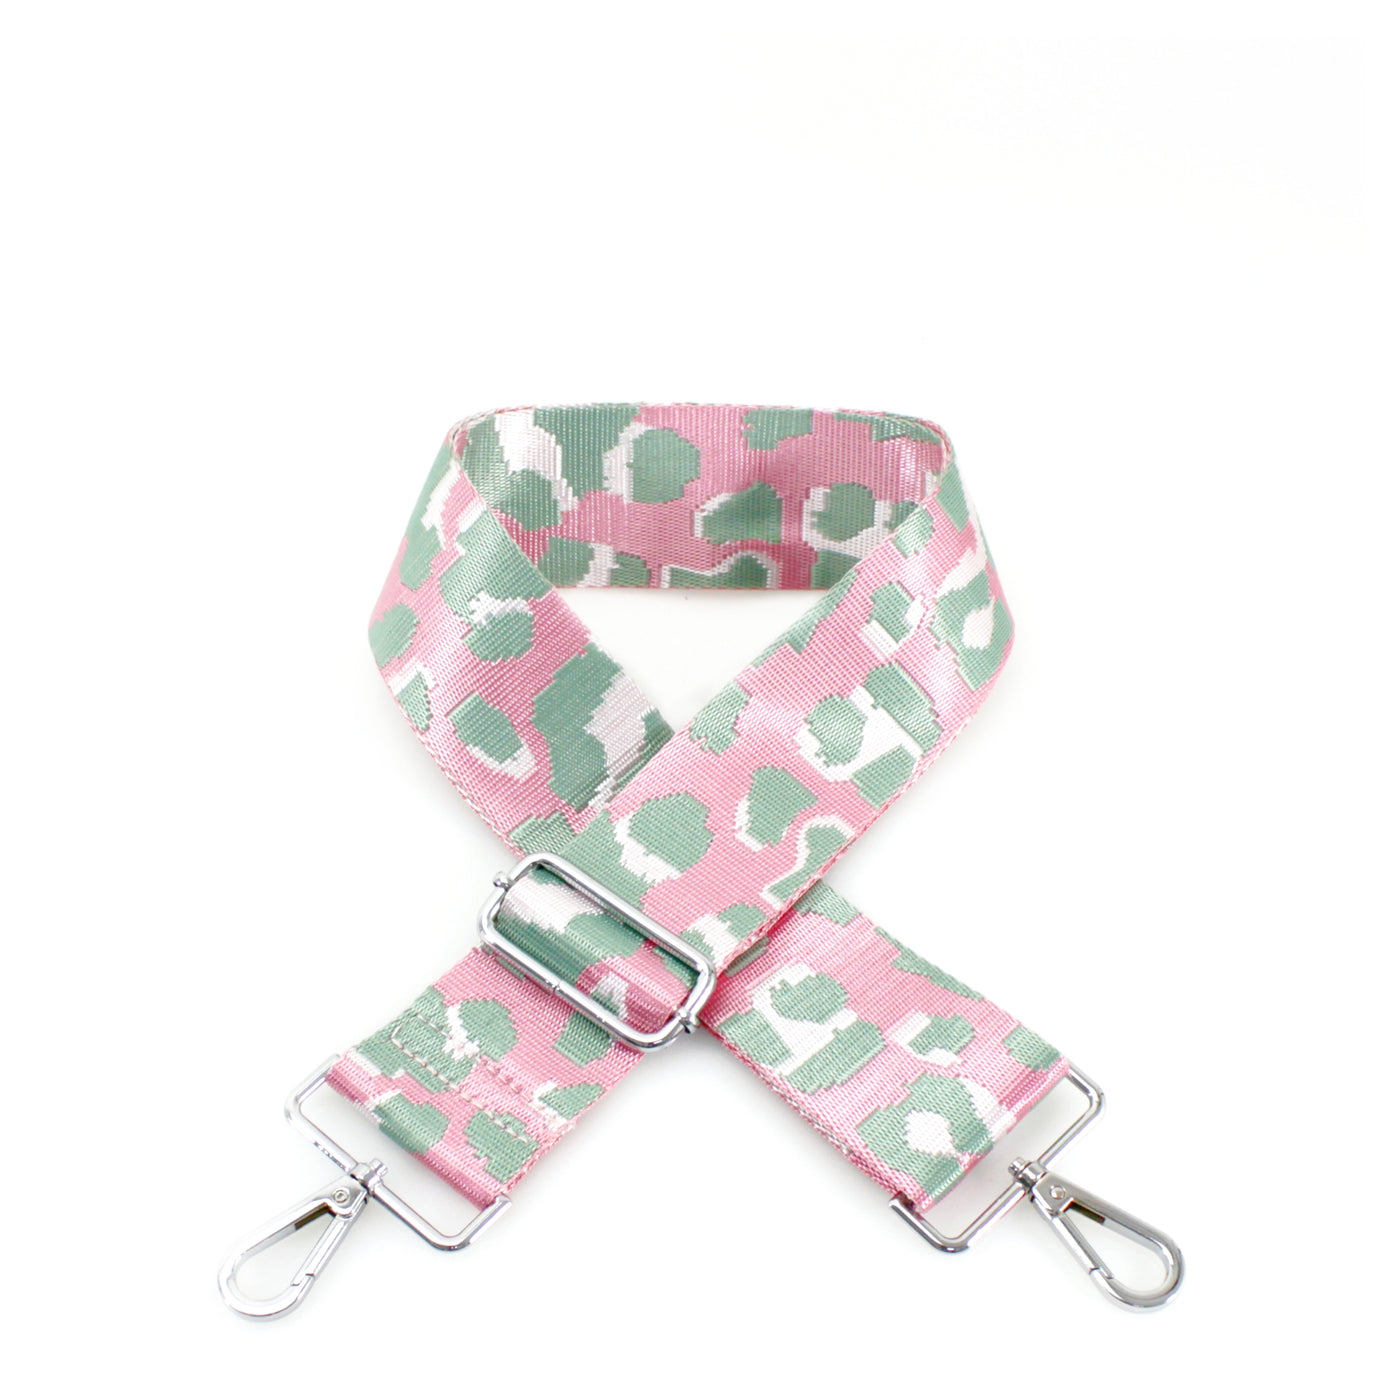 Pink & Mint Cheetah Print Bag Strap - Silver Fittings